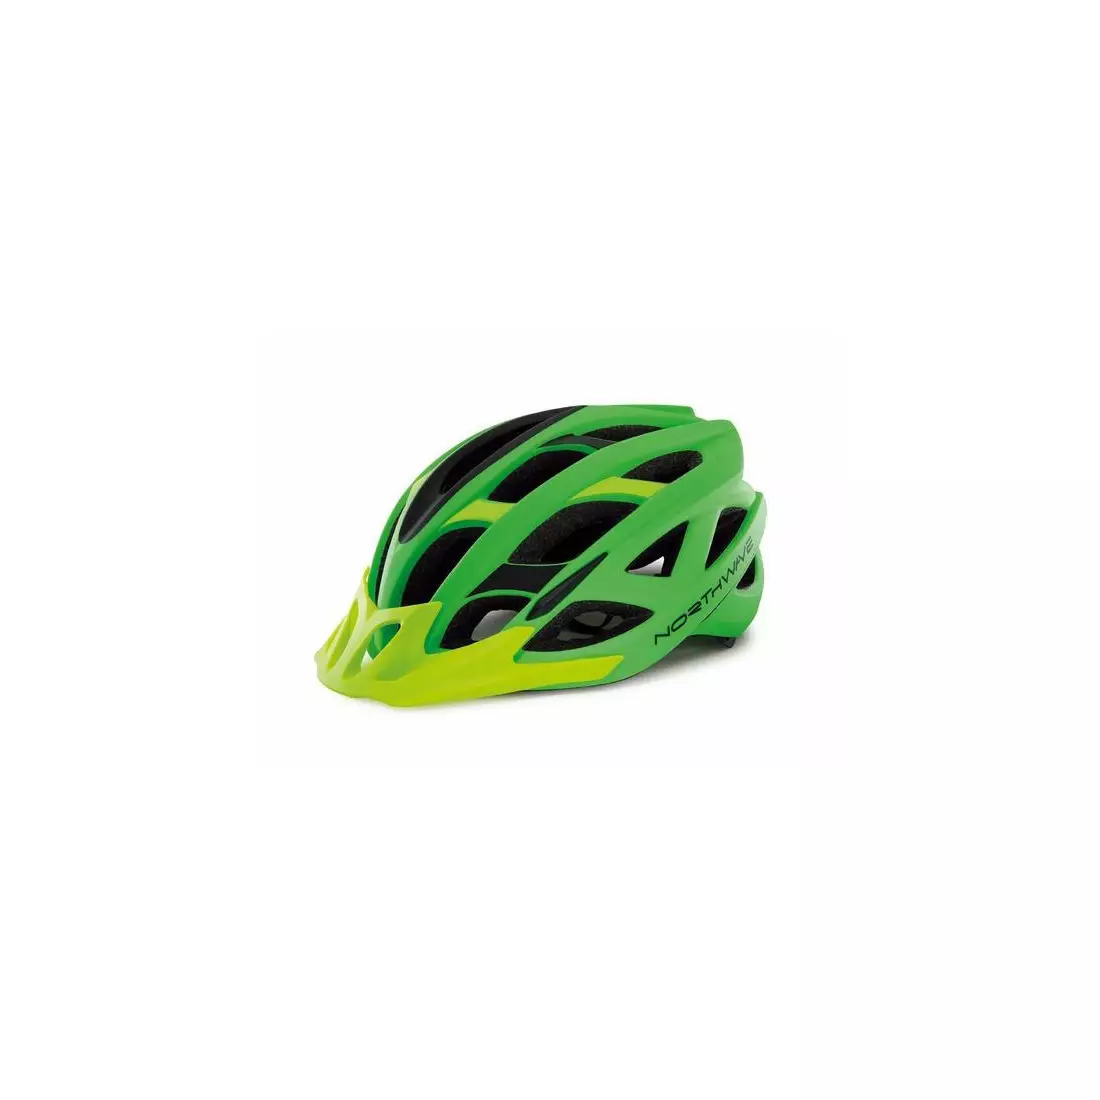 NORTHWAVE RANGER kerékpáros sisak, zöld